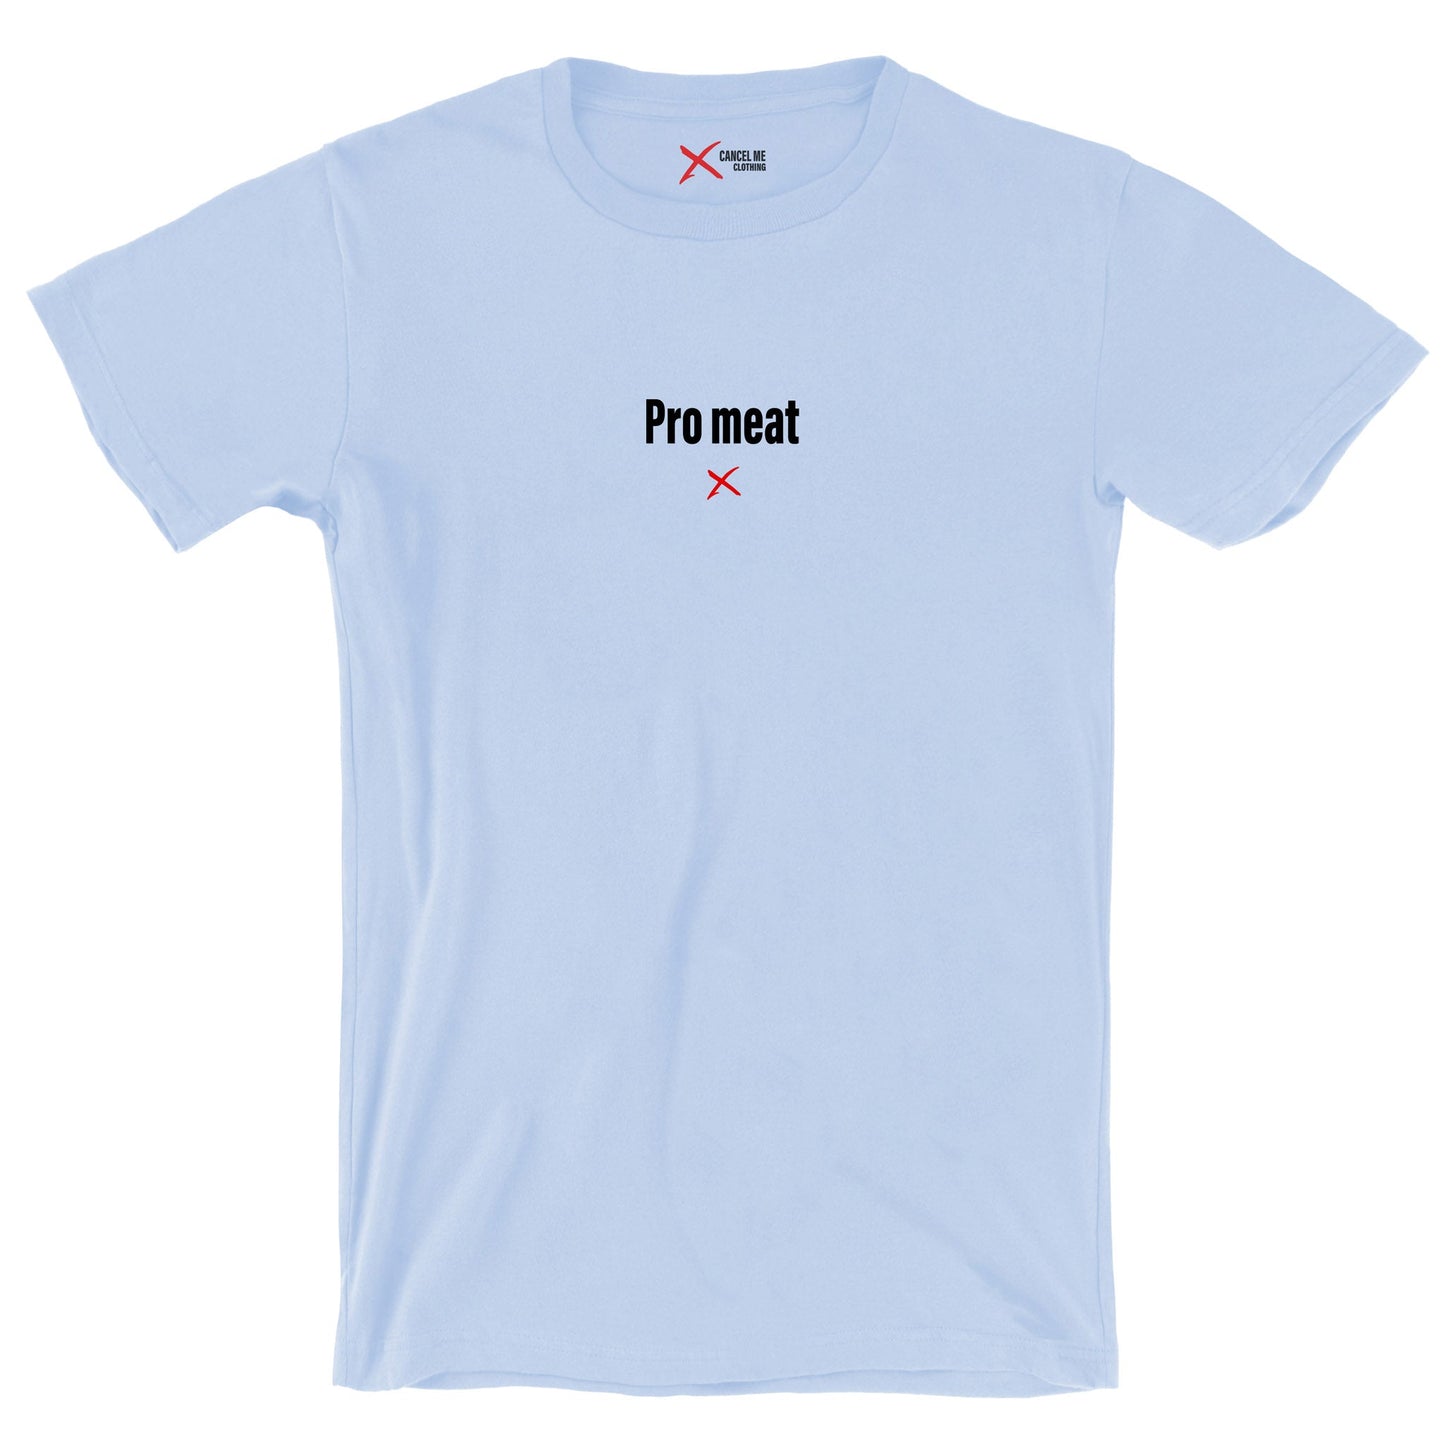 Pro meat - Shirt